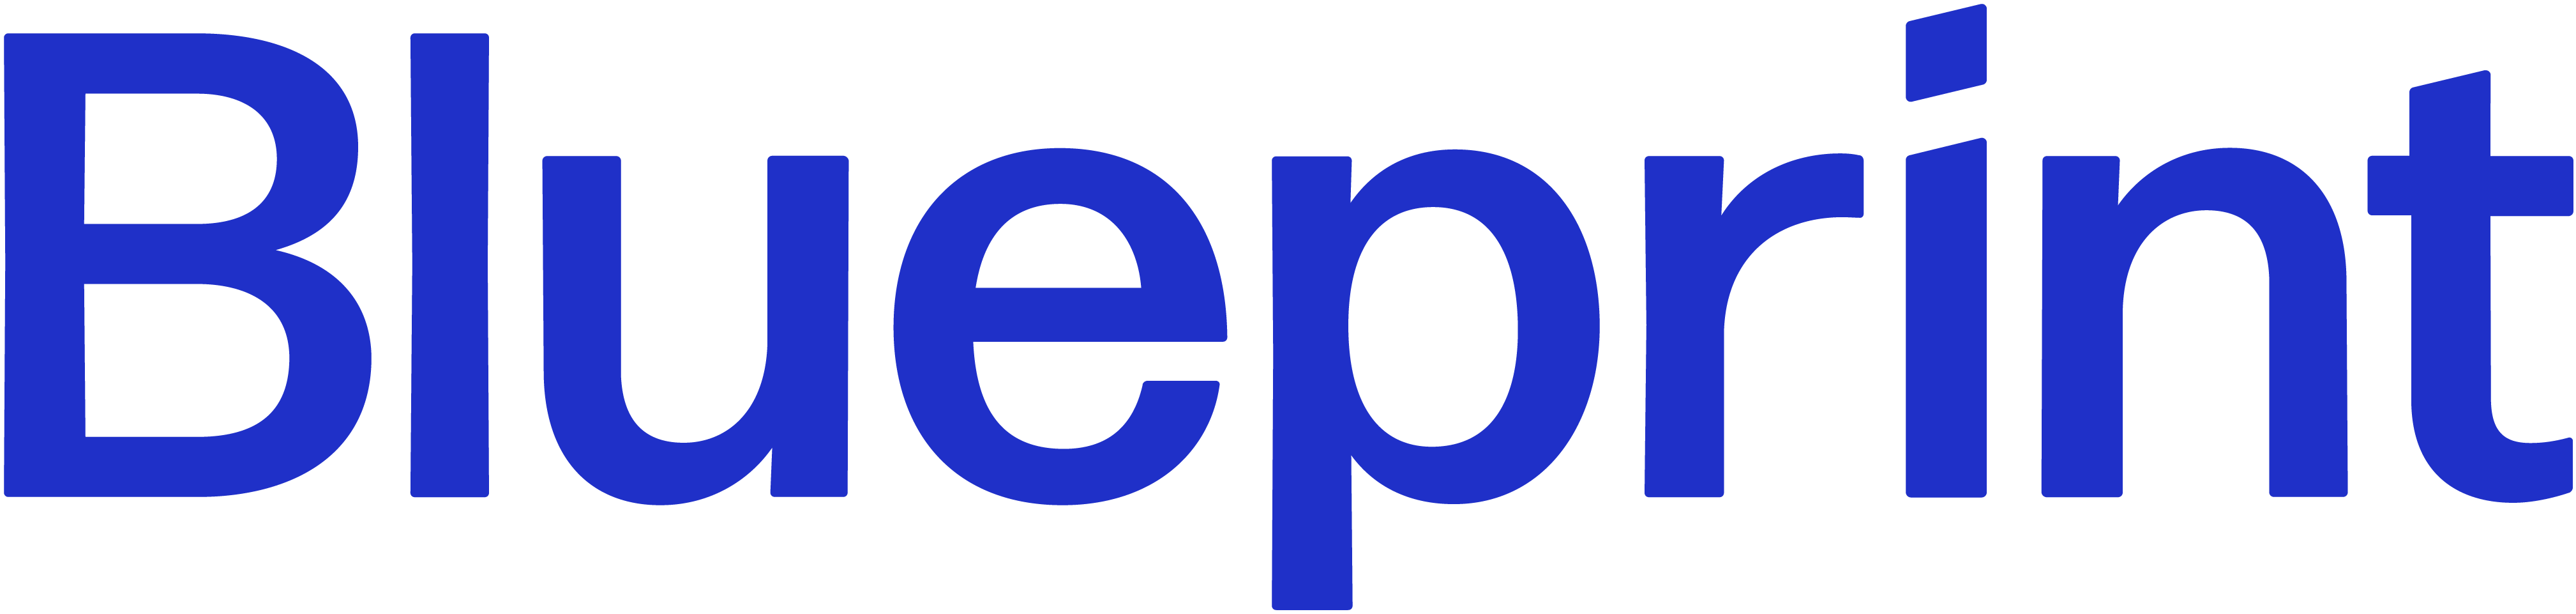 Blueprint-Logo-Primary-Blue